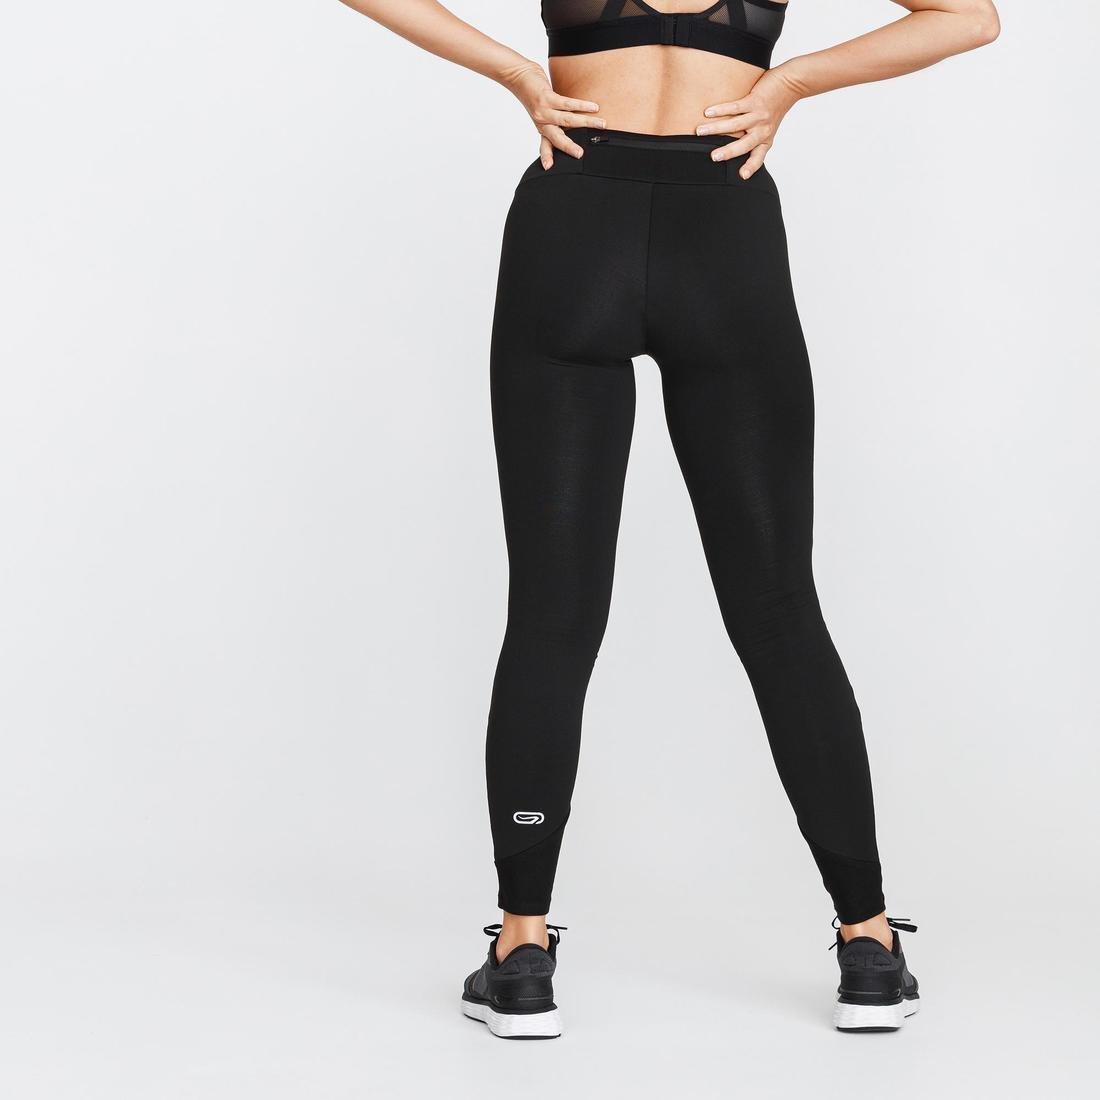 Kalenji black thermal leggings • sportswear / - Depop